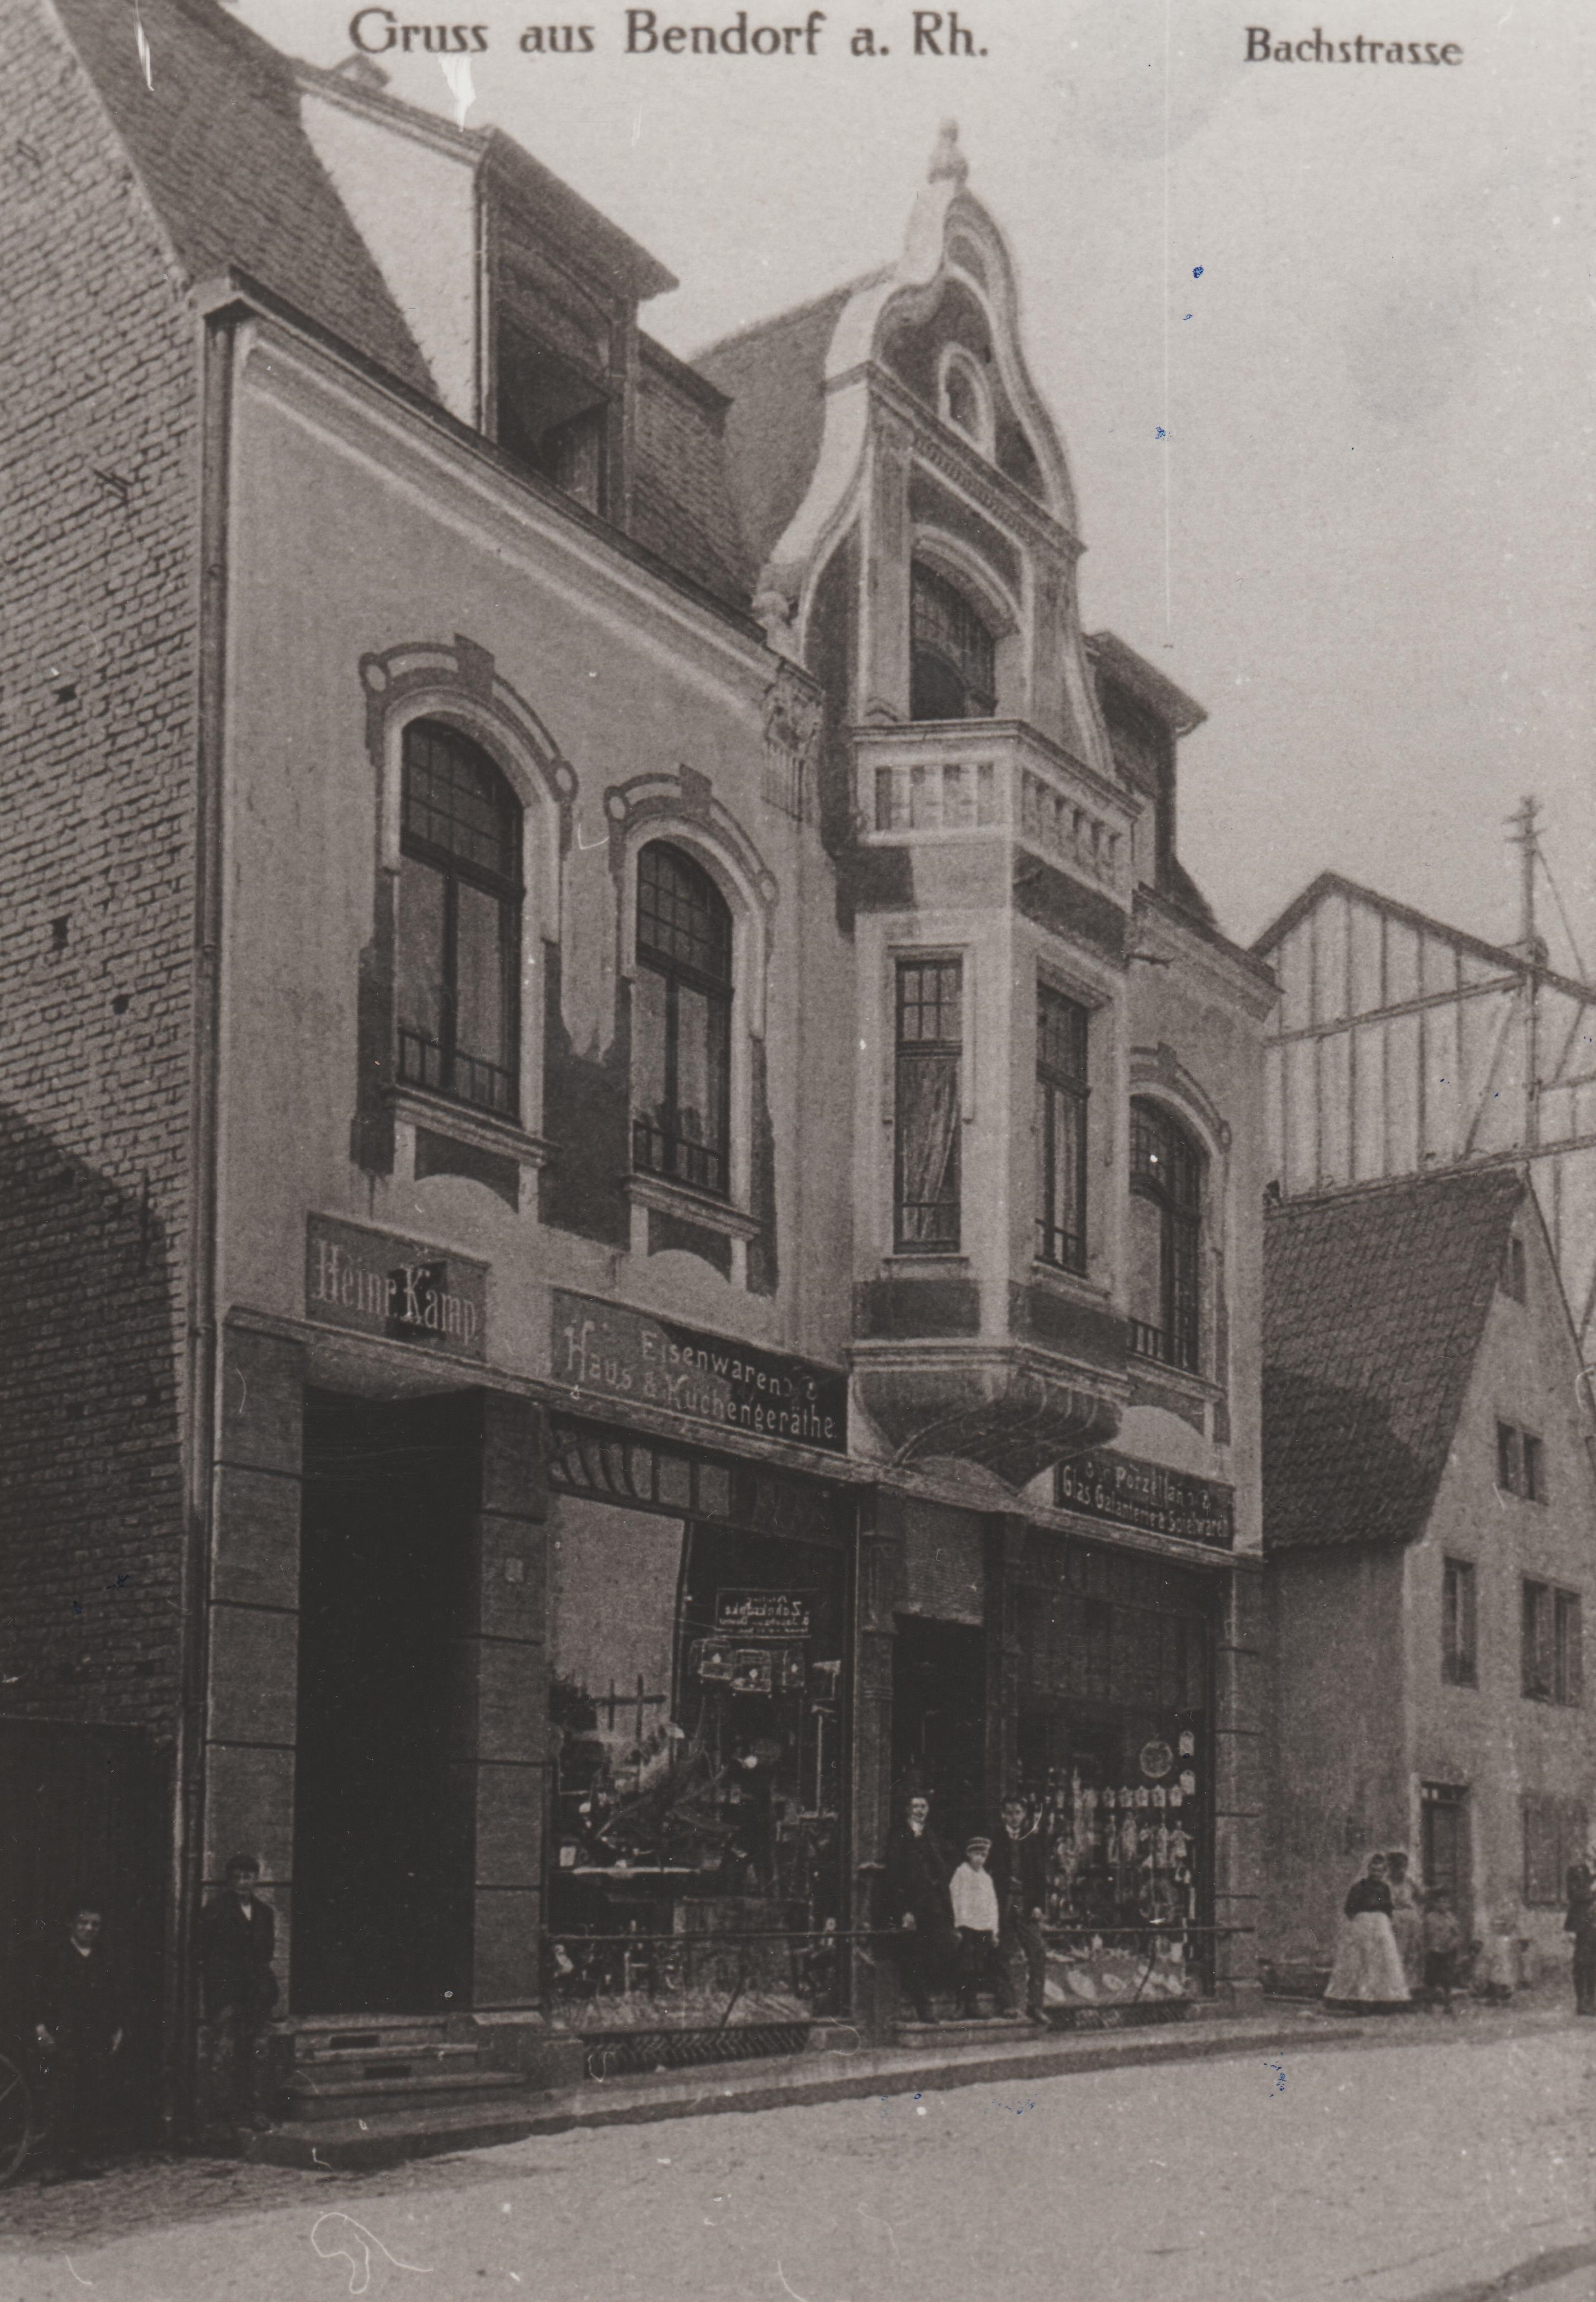 Bachstrasse in Bendorf, Geschäftshaus Kamp um 1910 (REM CC BY-NC-SA)